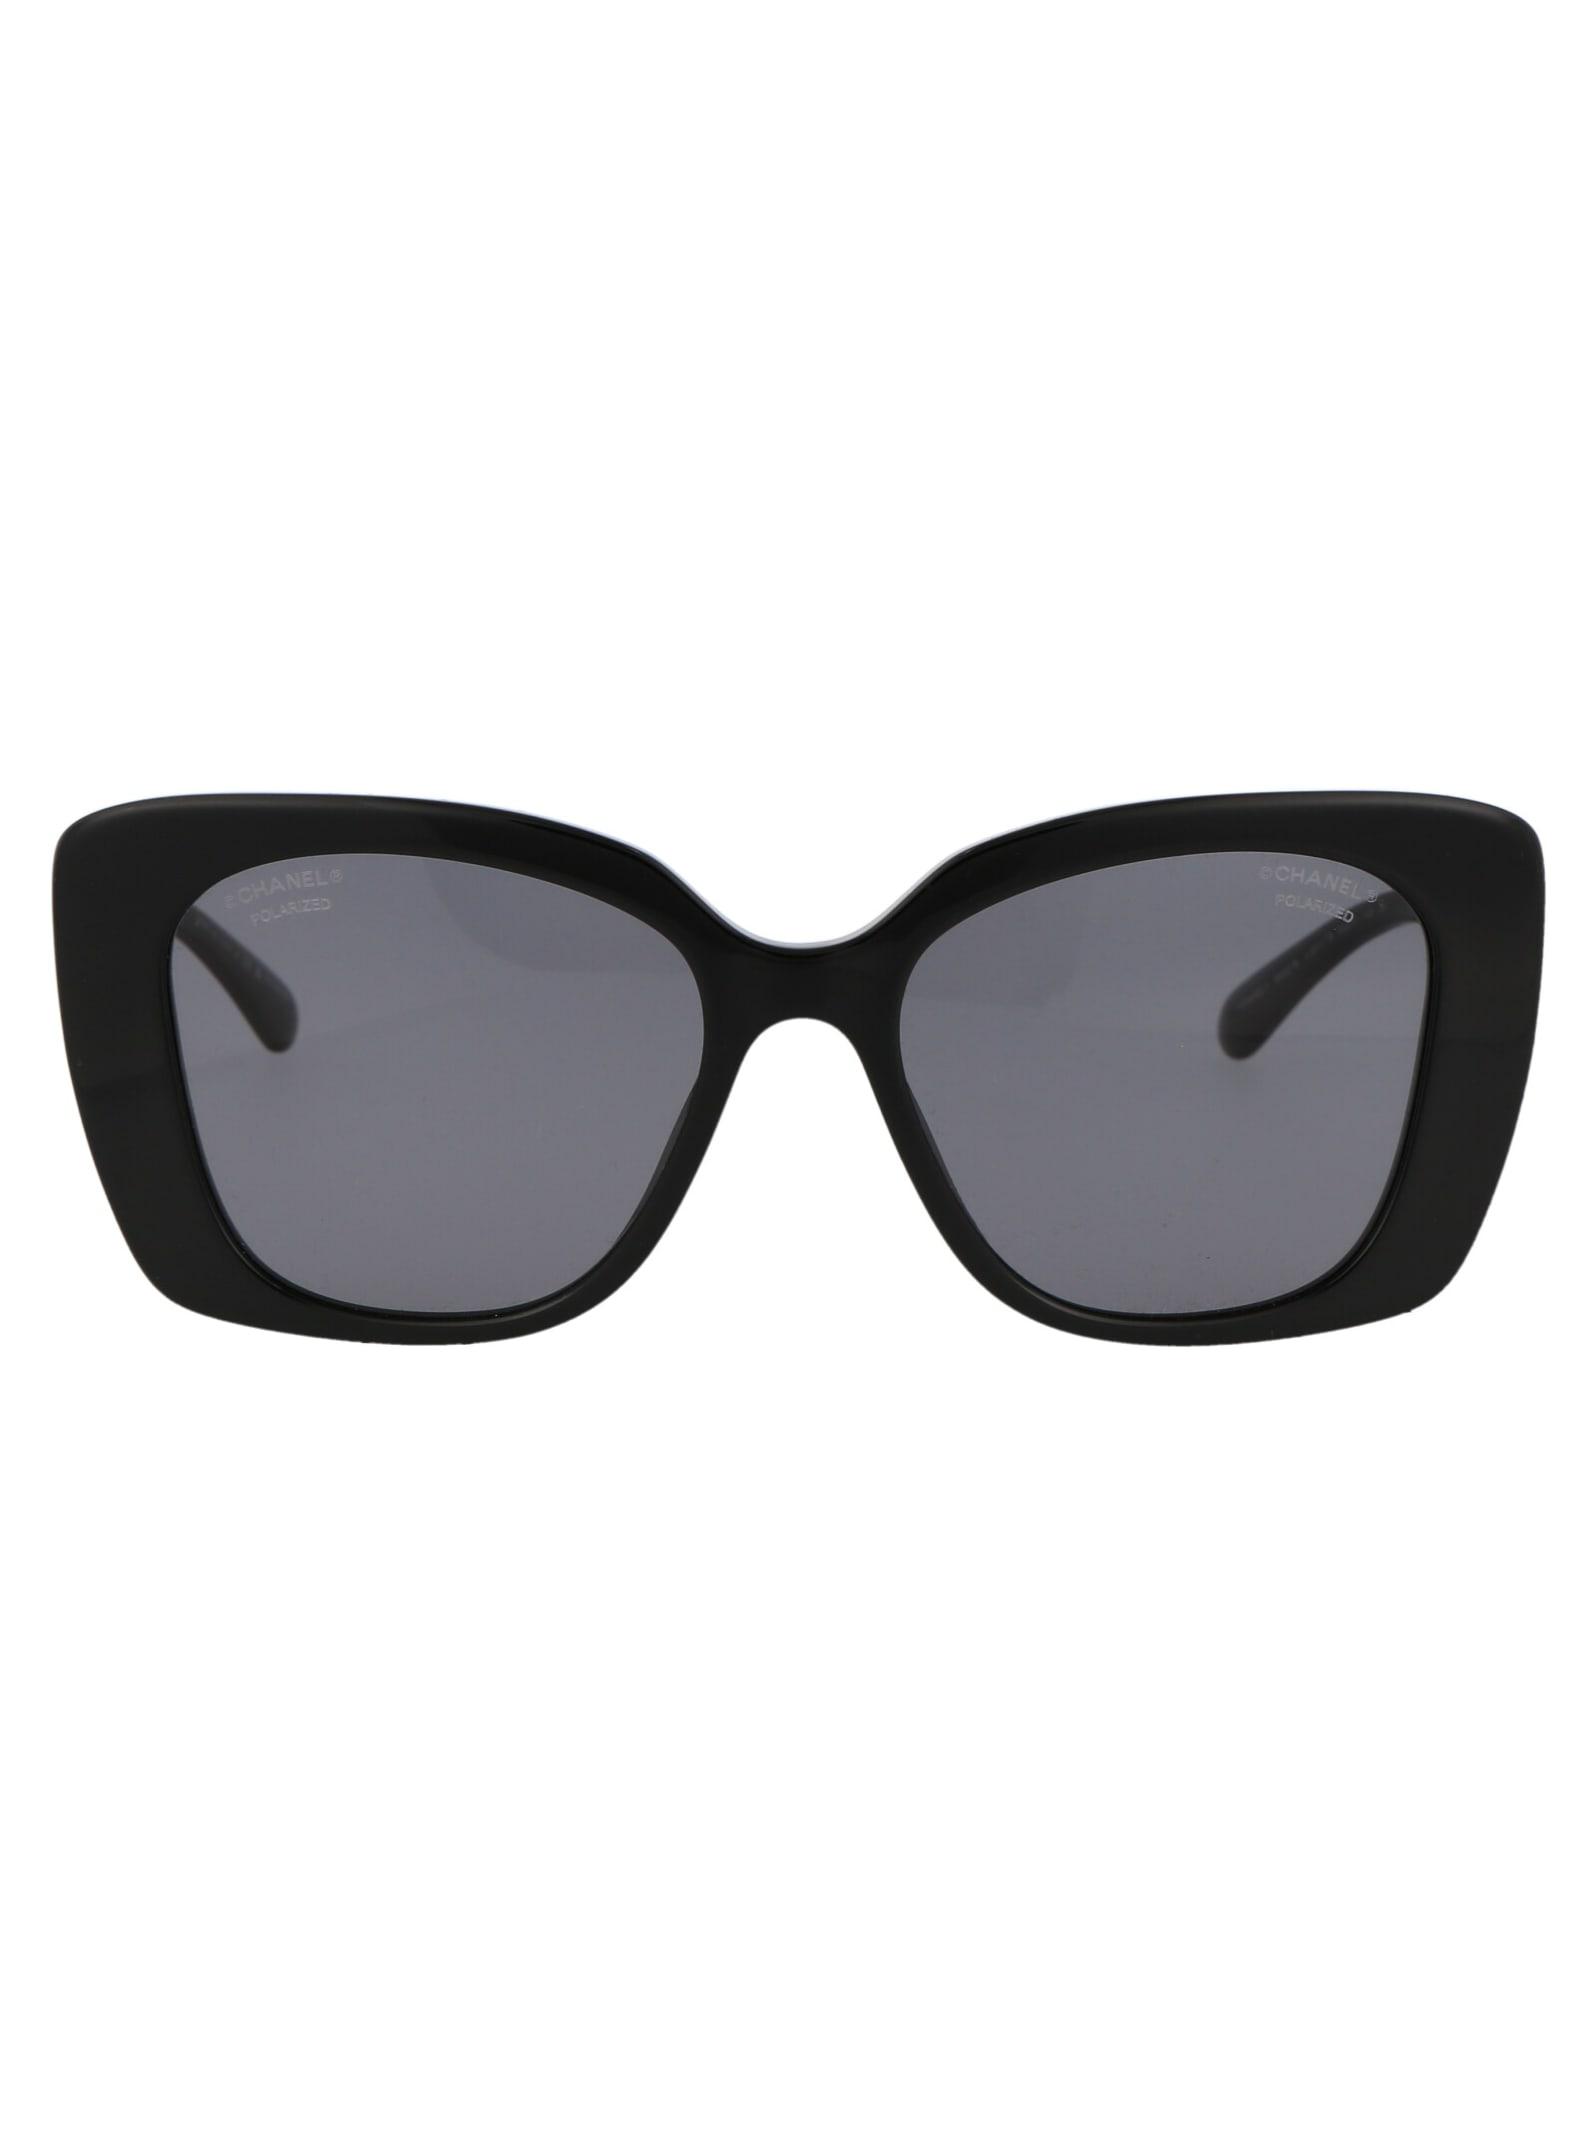 CHANEL Acetate Strass Polarized Square Sunglasses 5422-B Black